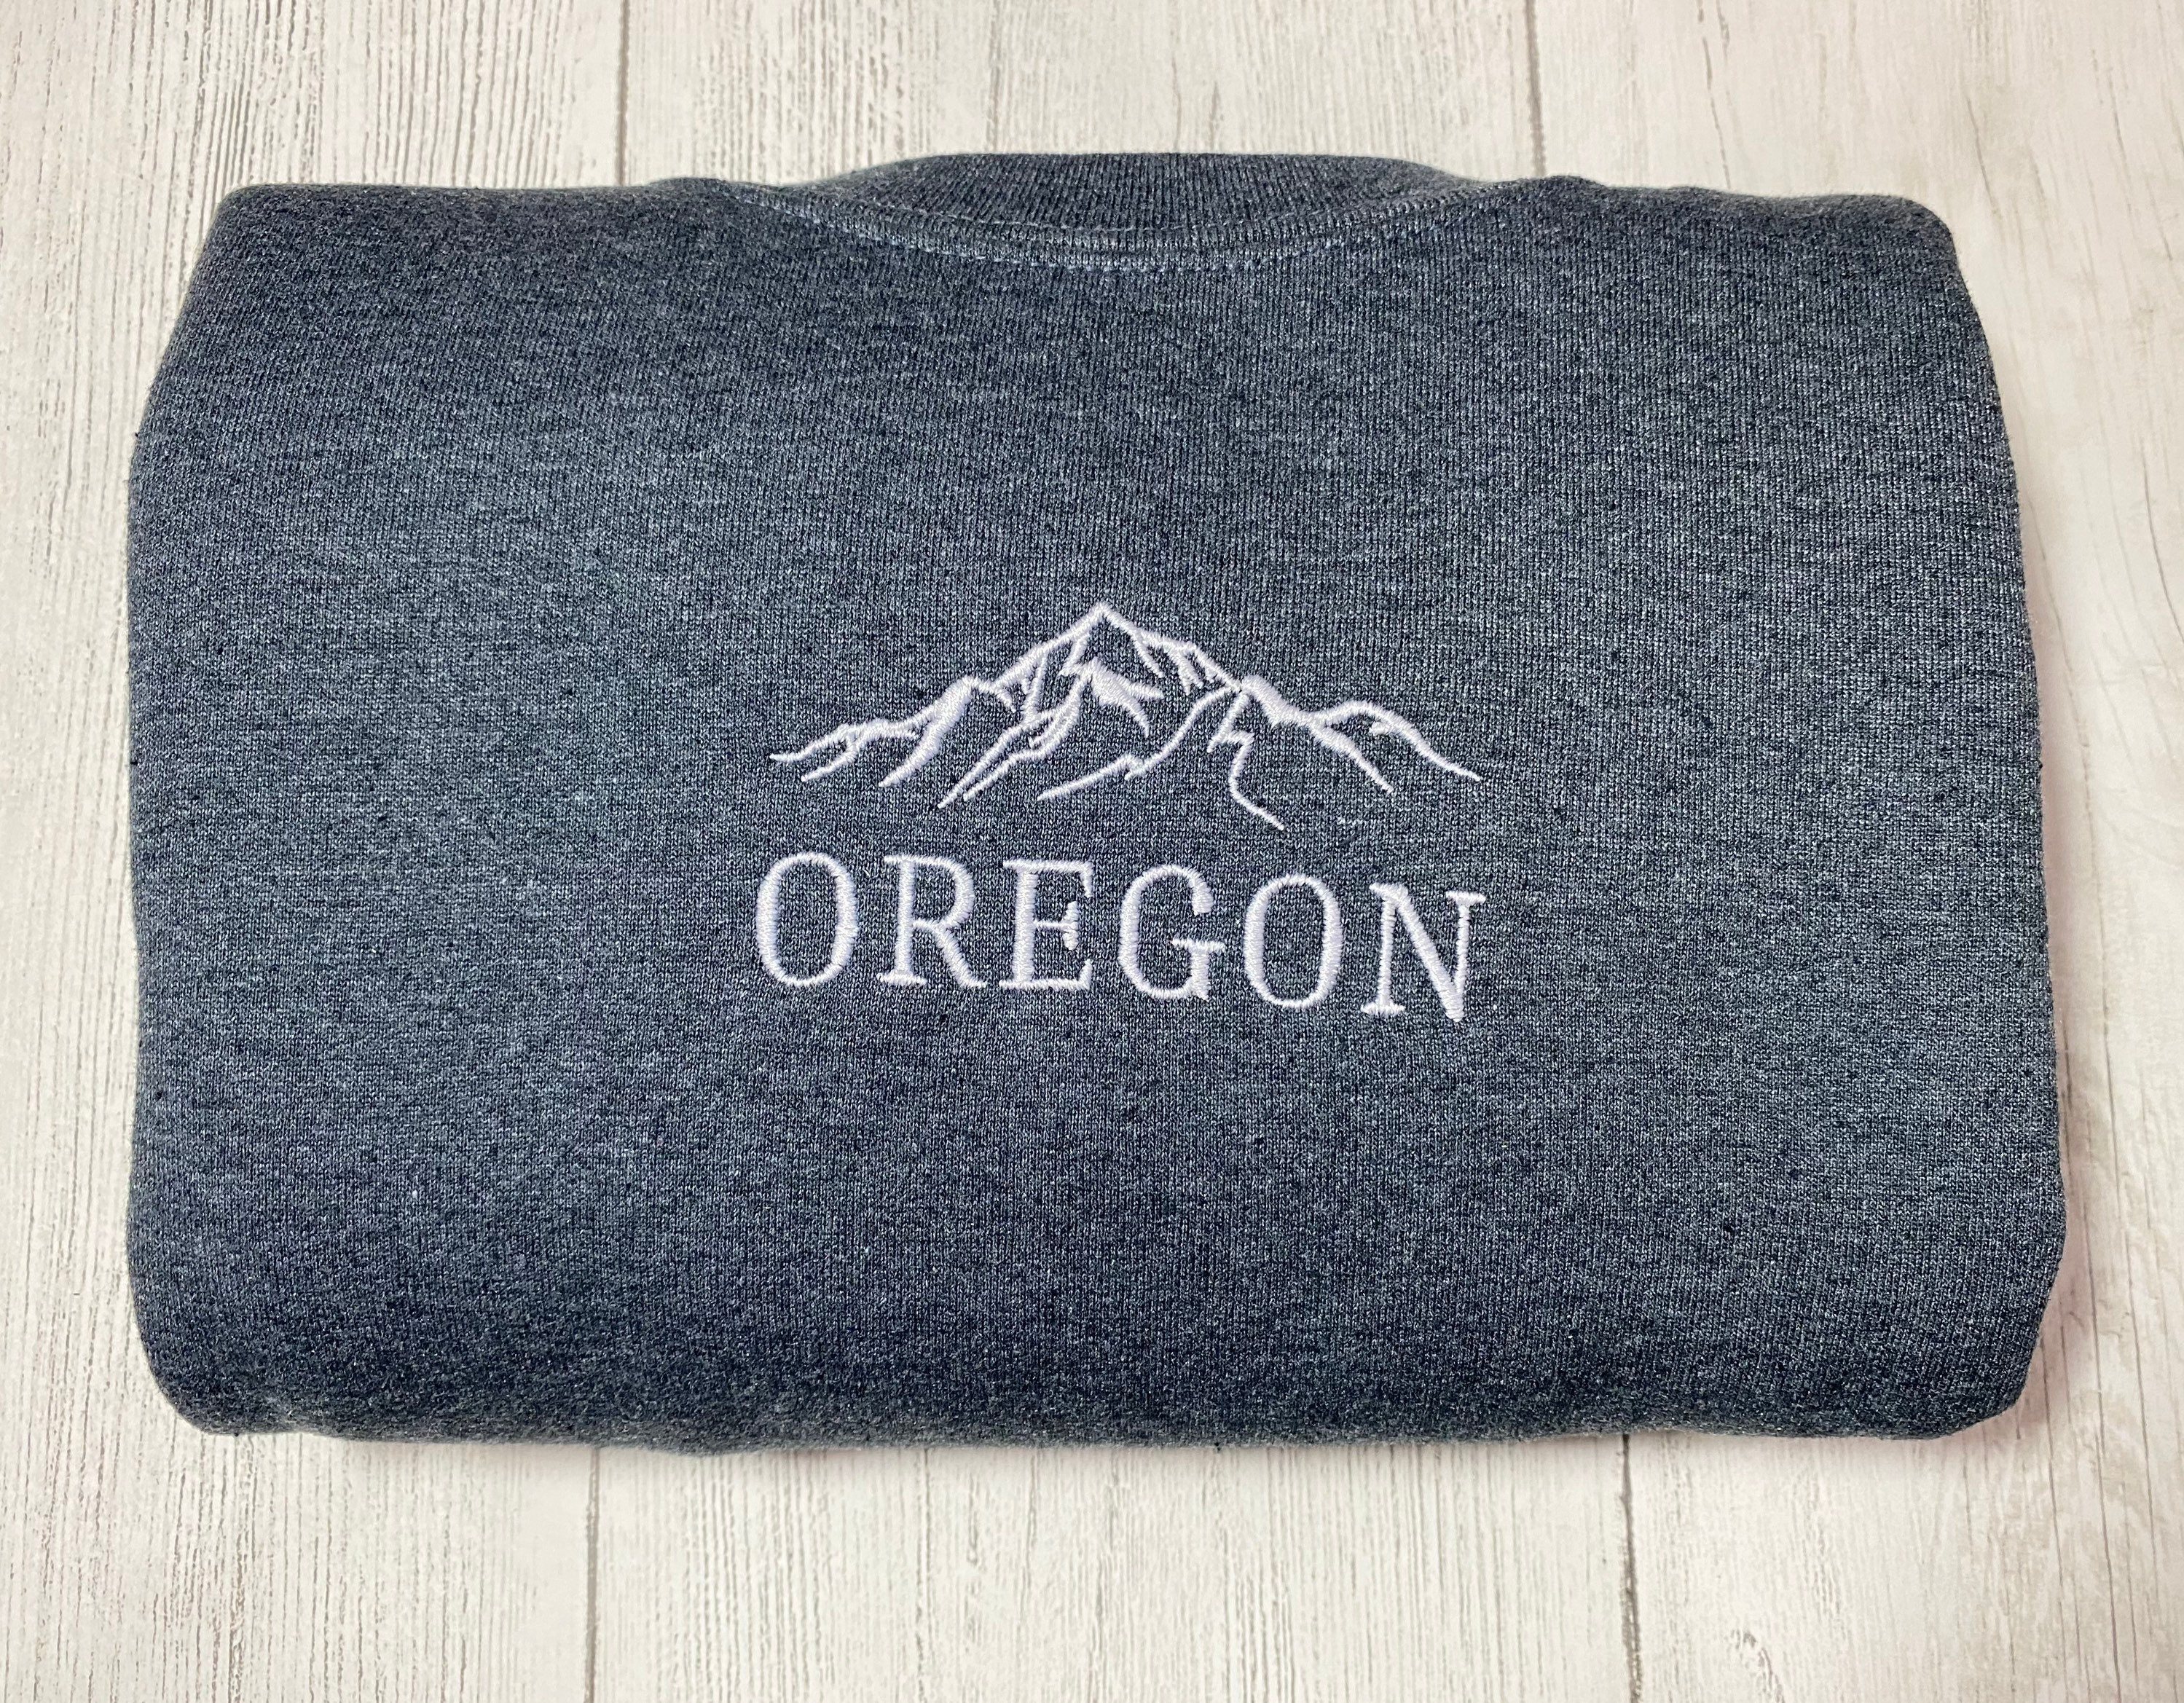 Buy Vintage Oregon Coast Usa Colorblock Sweatshirt Xlarge Oregon Online in  India 